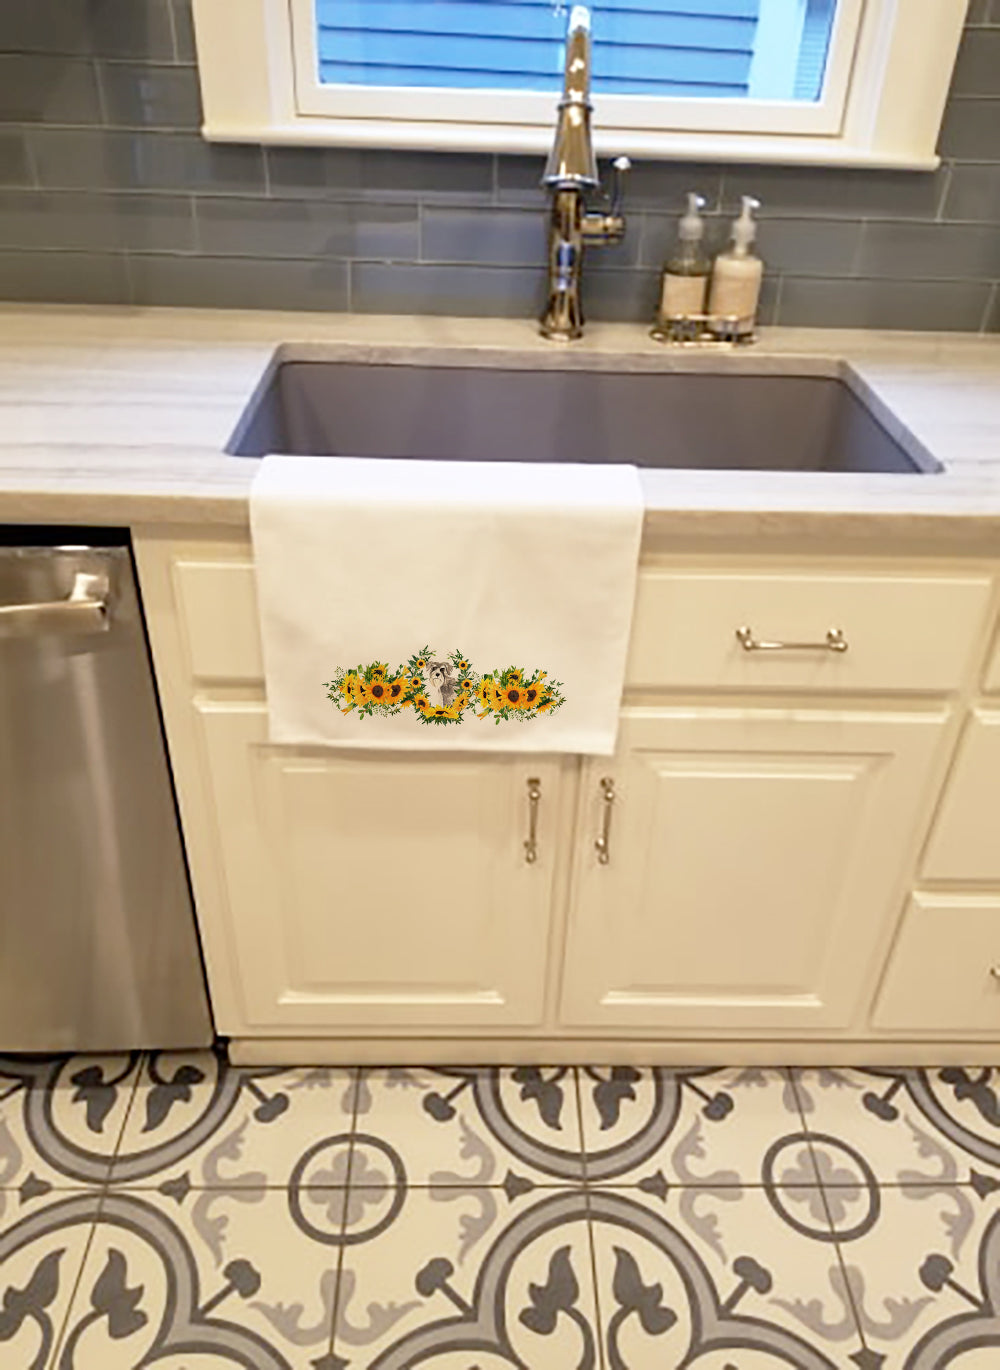 Buy this Schnauzer #1 in Sunflowers White Kitchen Towel Set of 2